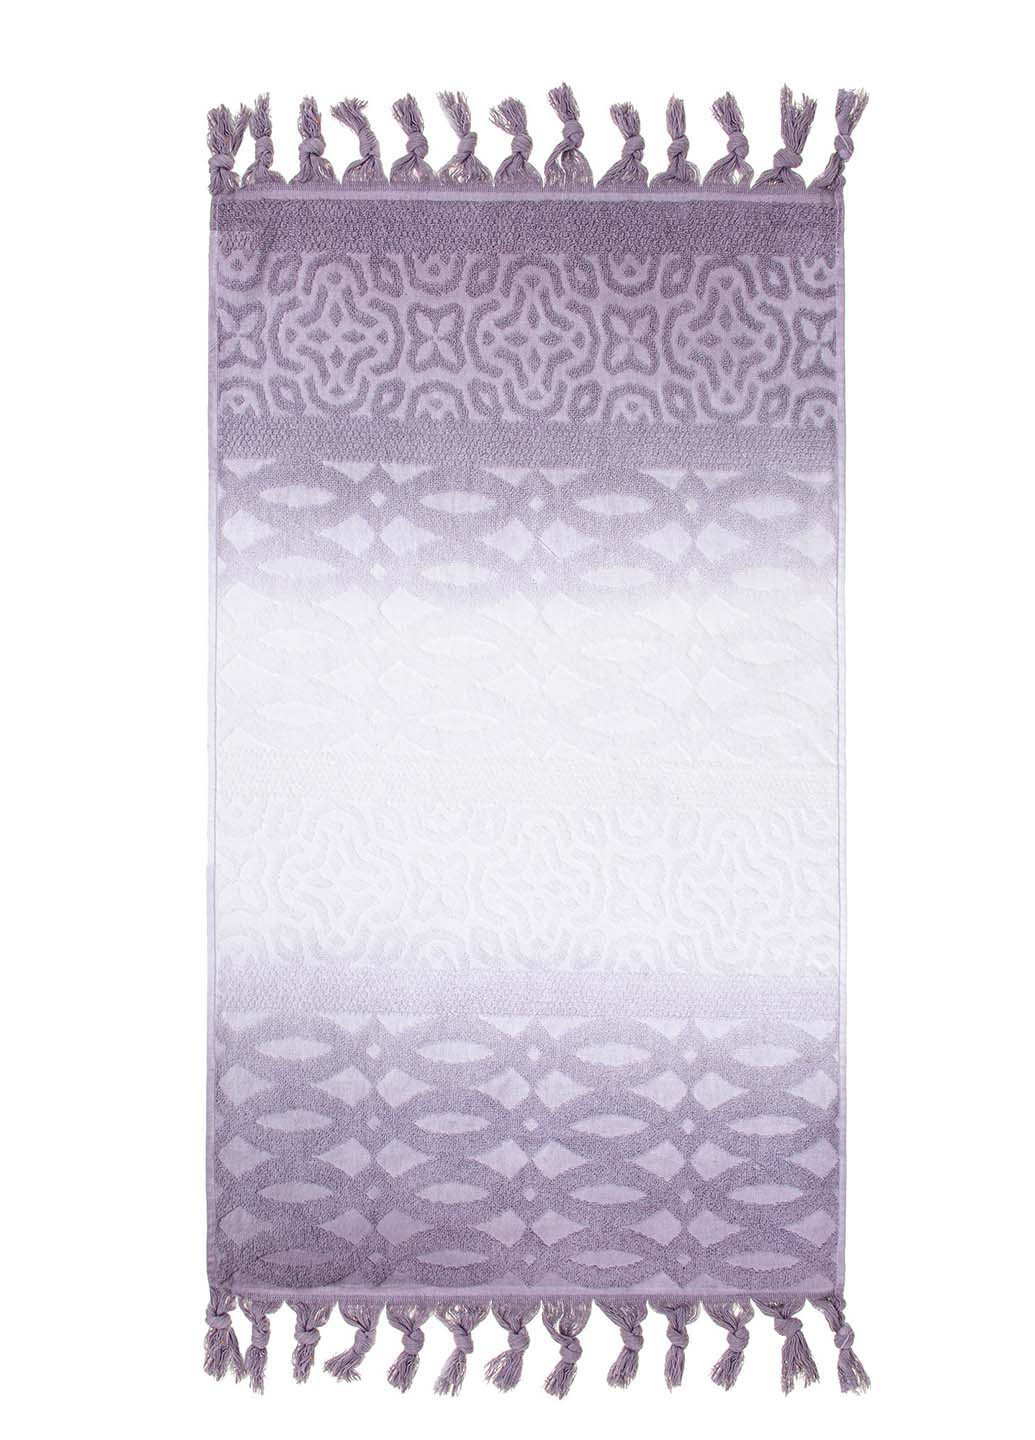 Home Line полотенце, 68х127 см градиент фиолетовый производство - Турция